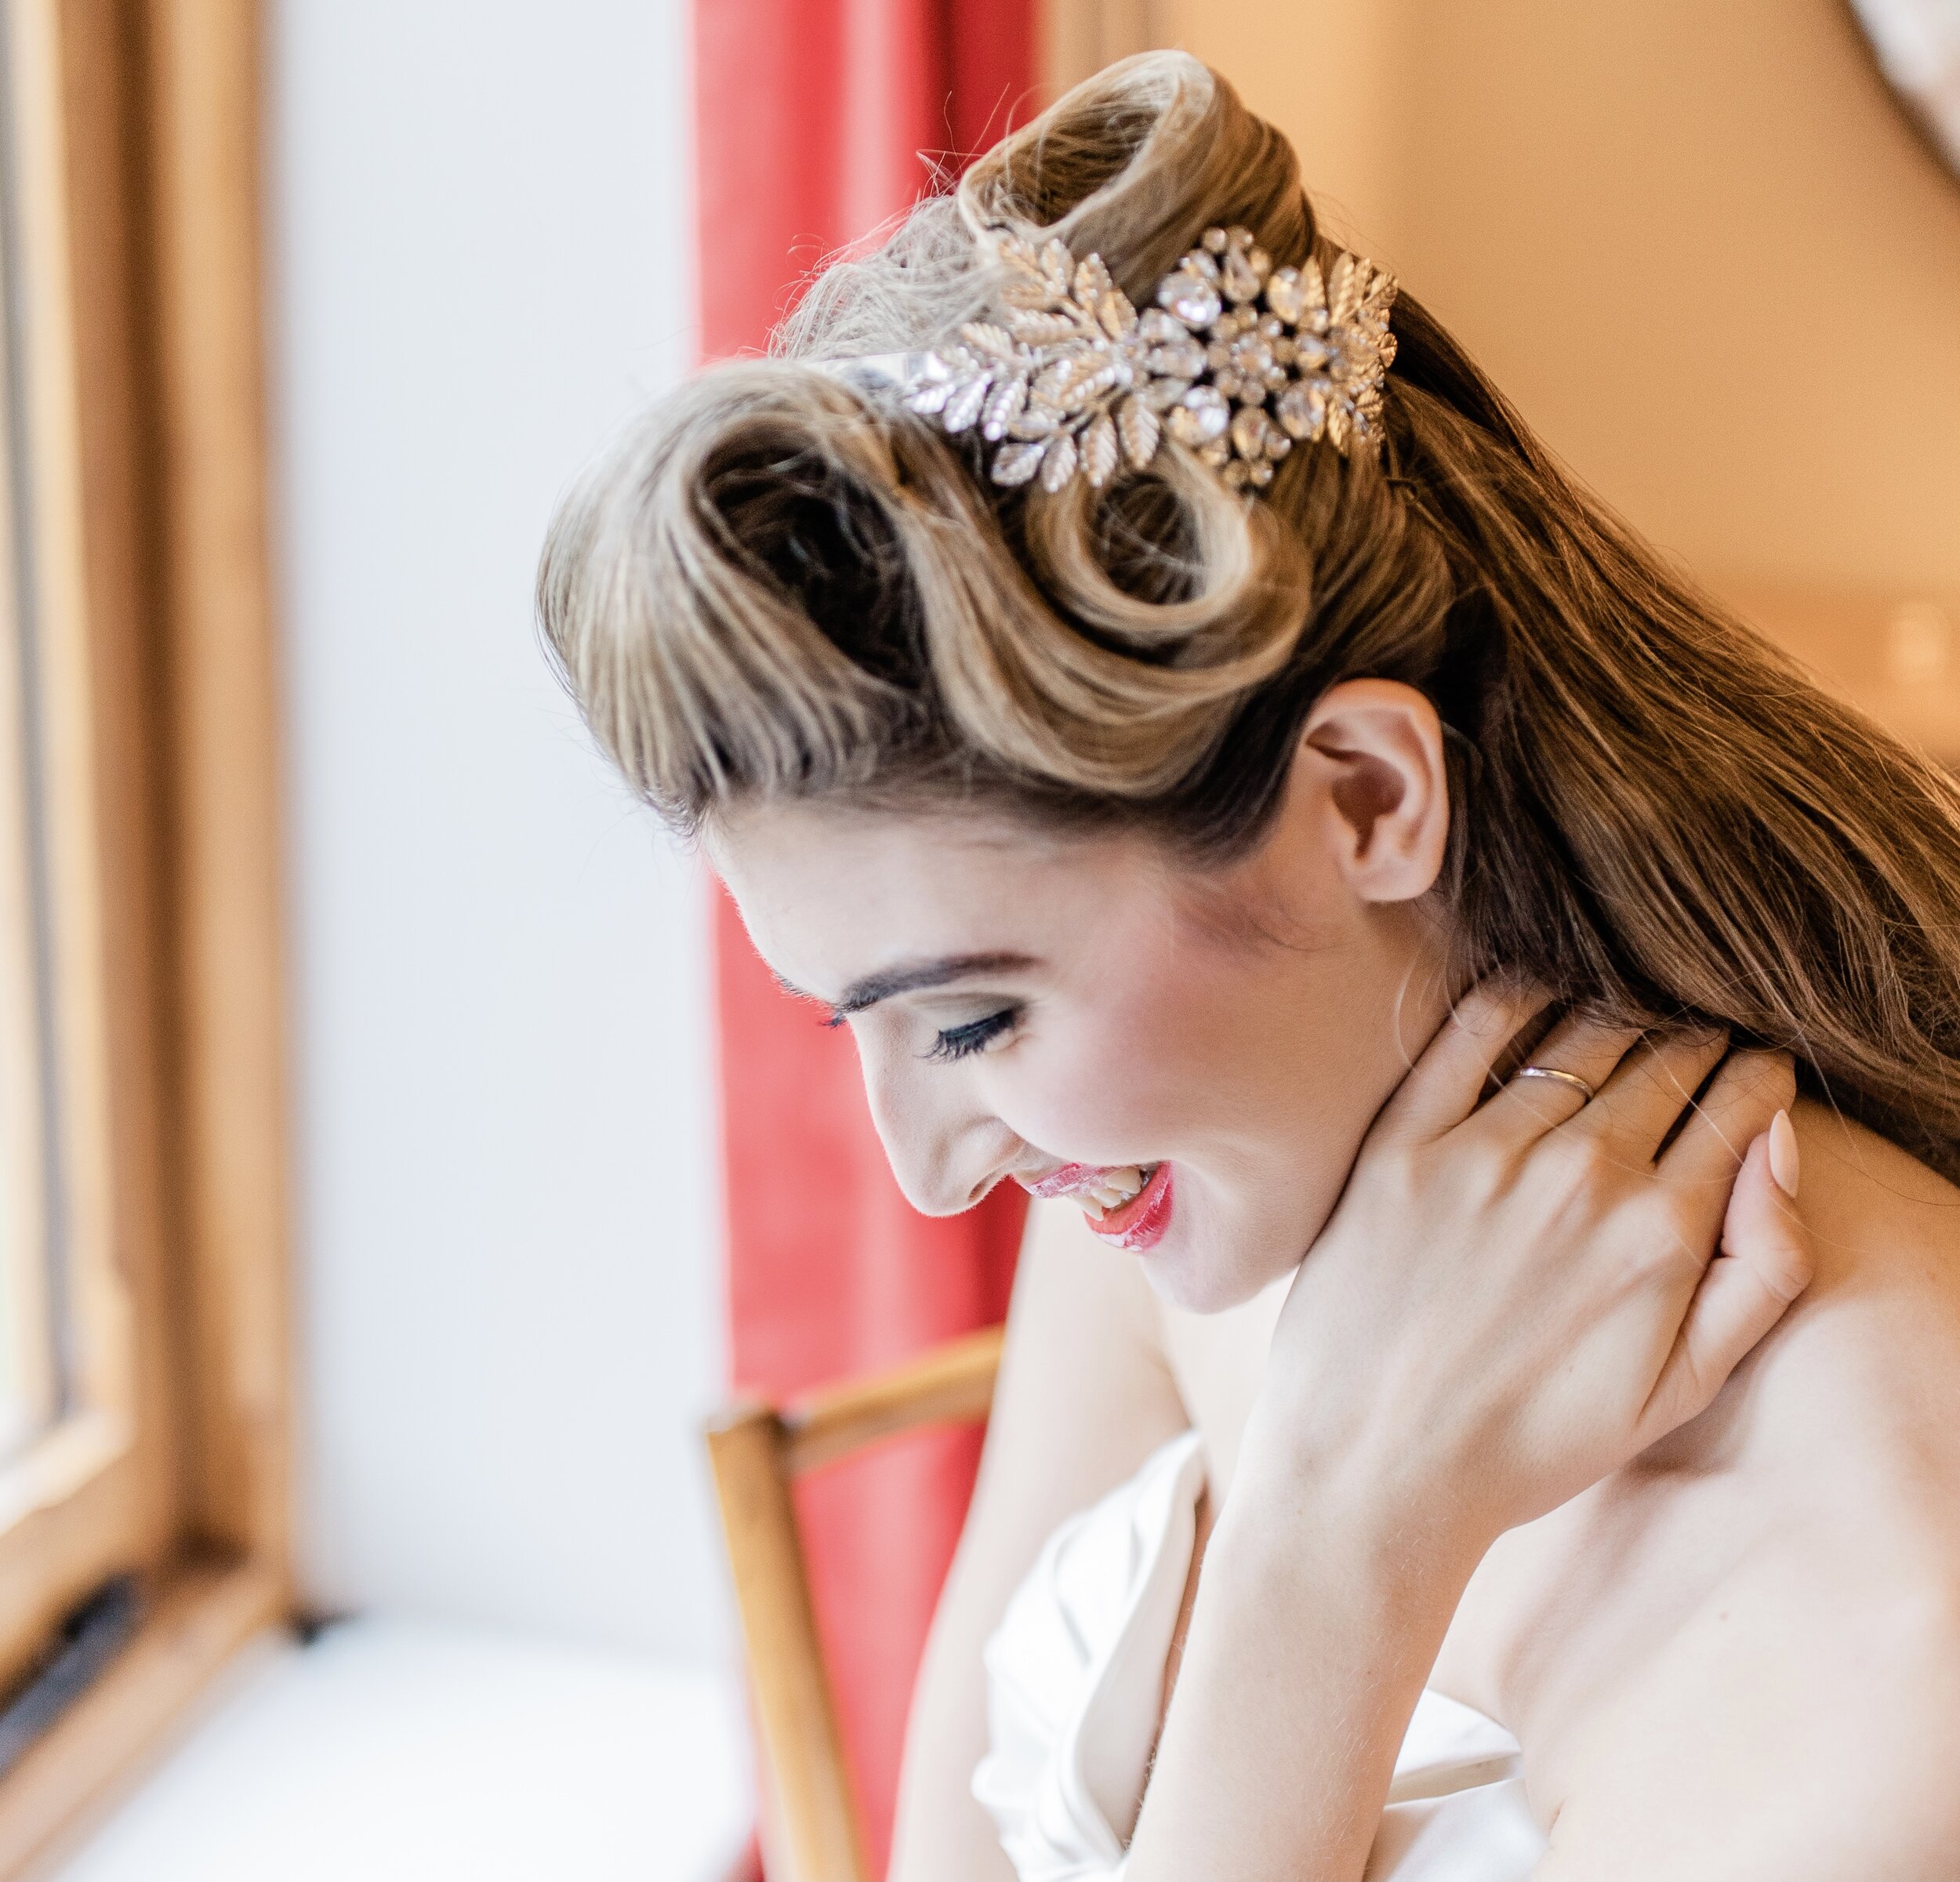 Bridal hairstyle with tiara - YouTube